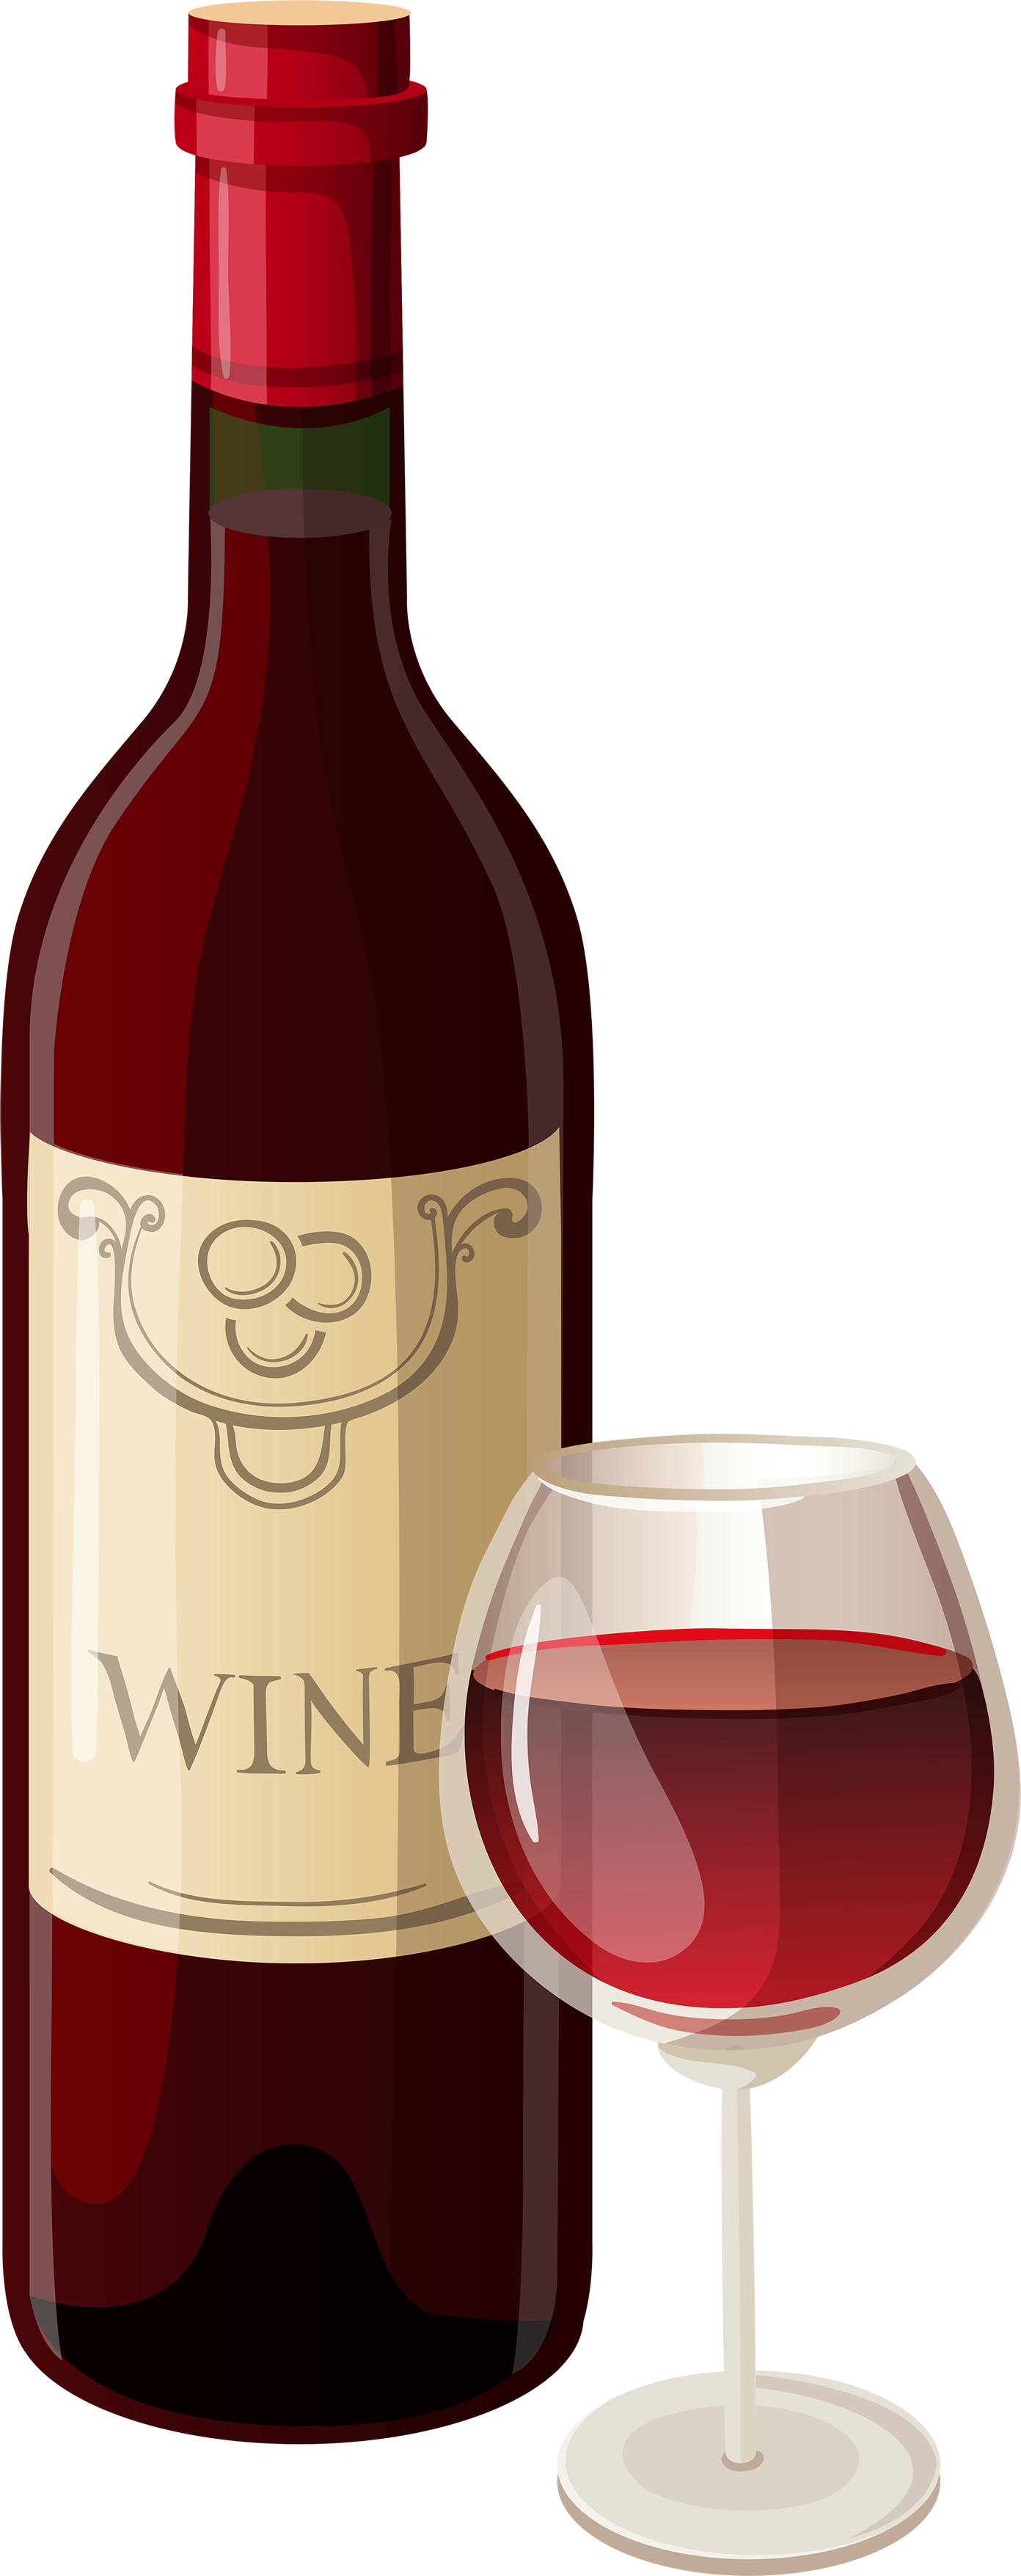 Wine Png Transparent Image - Wine, Transparent background PNG HD thumbnail